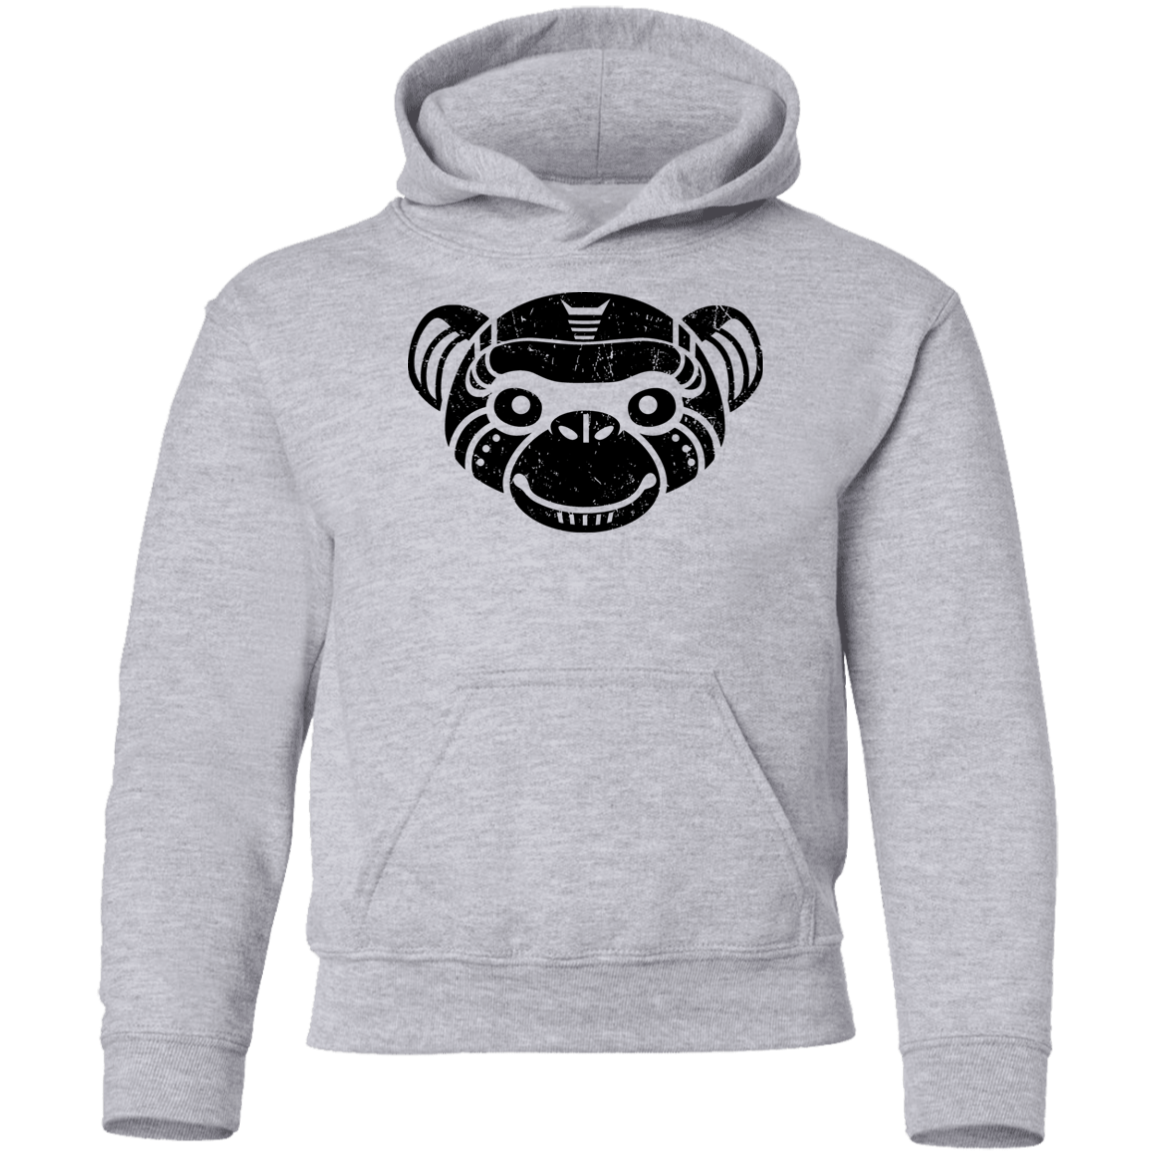 Black Distressed Emblem Hoodies for Kids (Monkey/Fix)